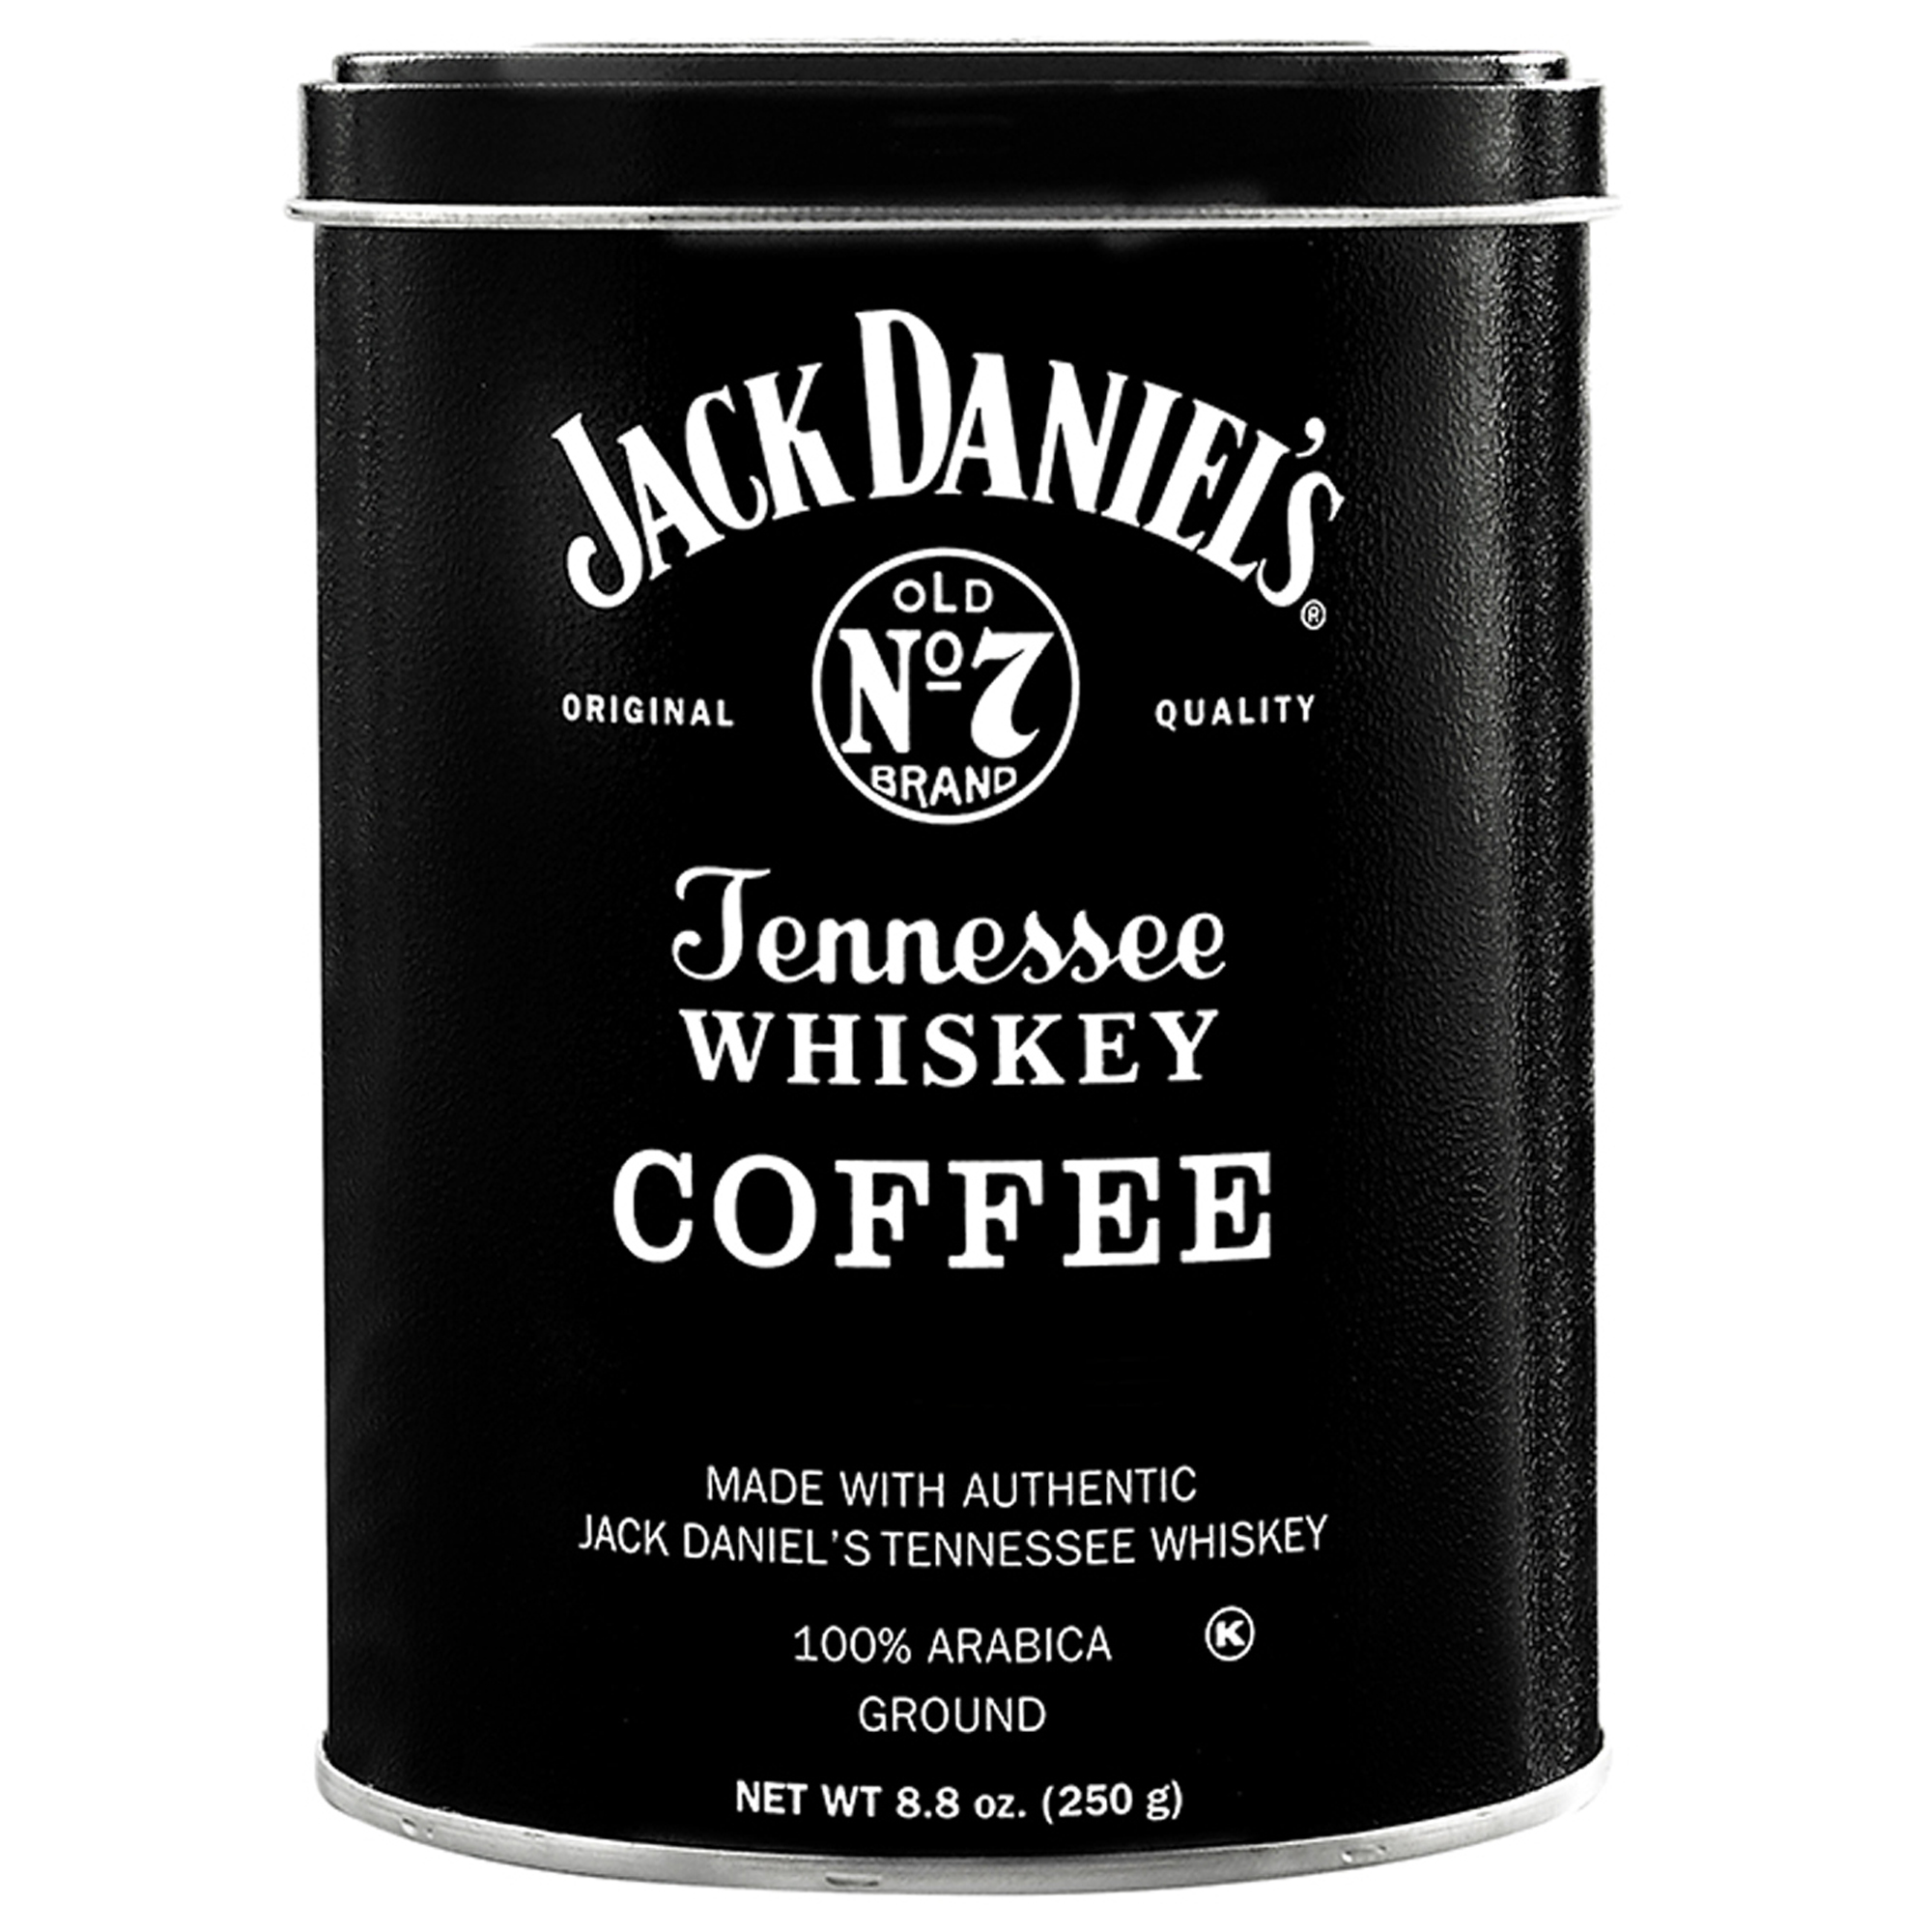 Jack Daniel's Tennessee Whiskey Coffee, 8.8 oz Can, Medium Roast, Ground Coffee - image 1 of 7